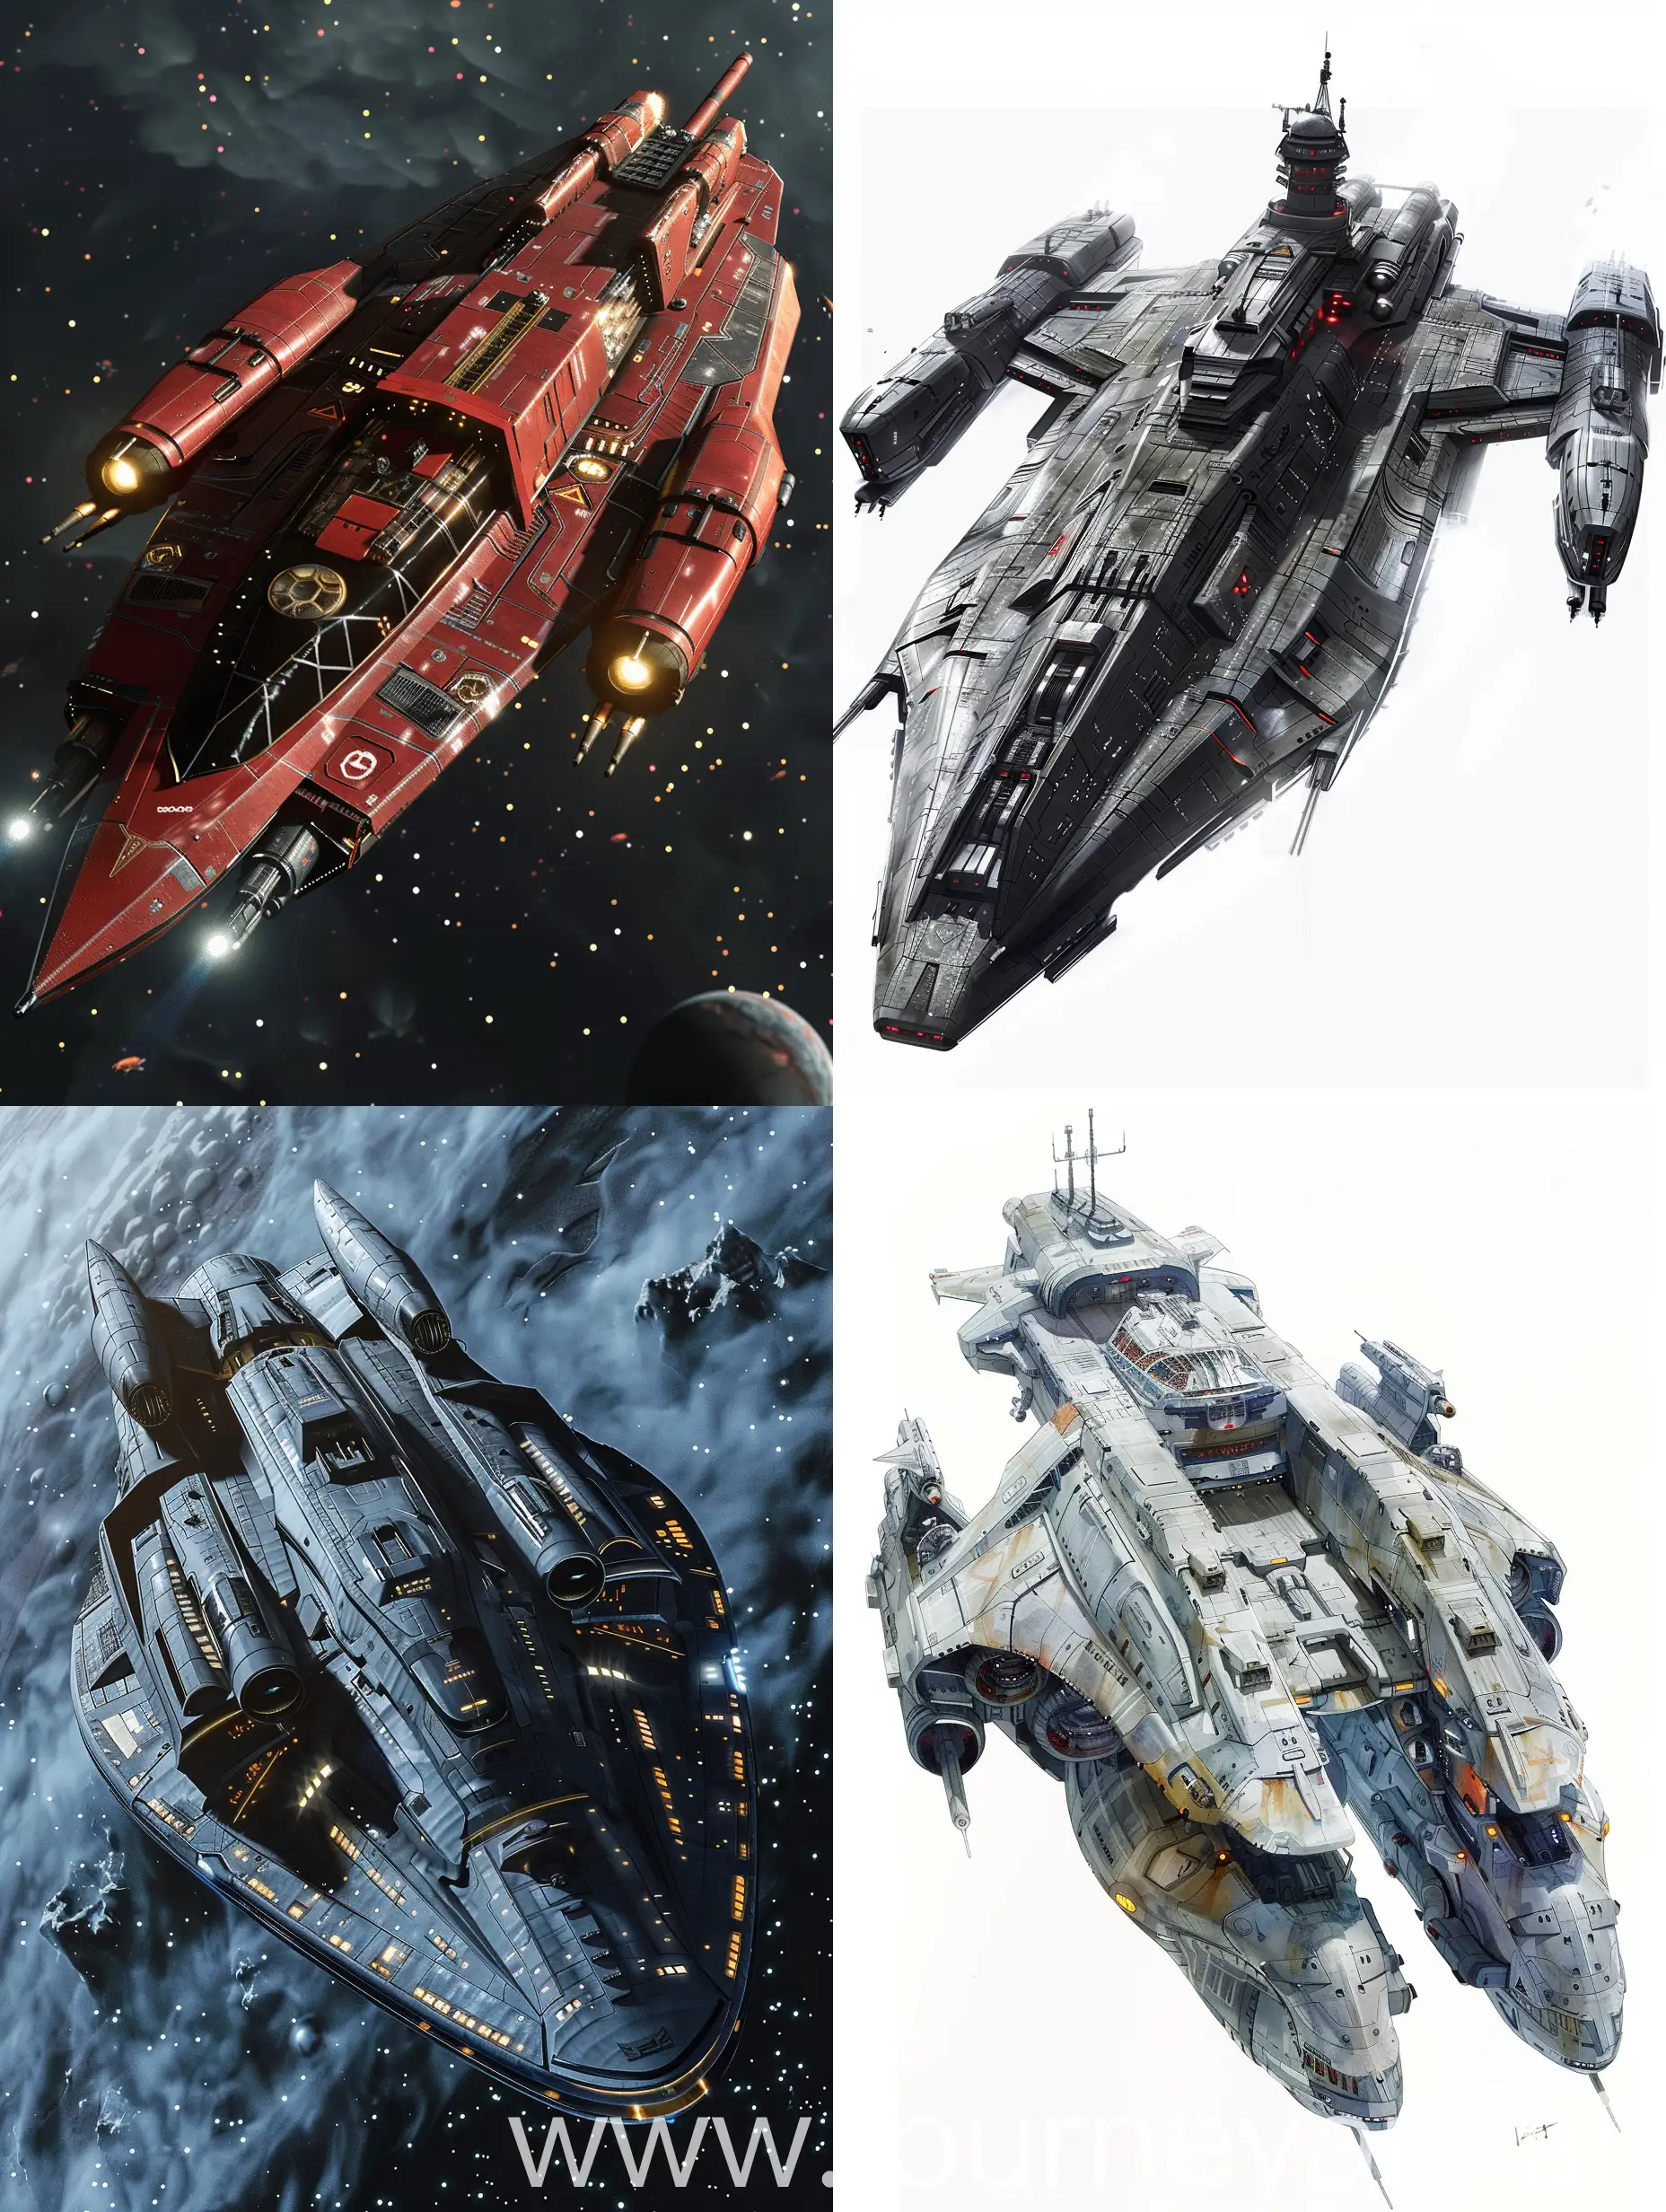 Futuristic-Starship-Explorers-in-Vast-Galaxy